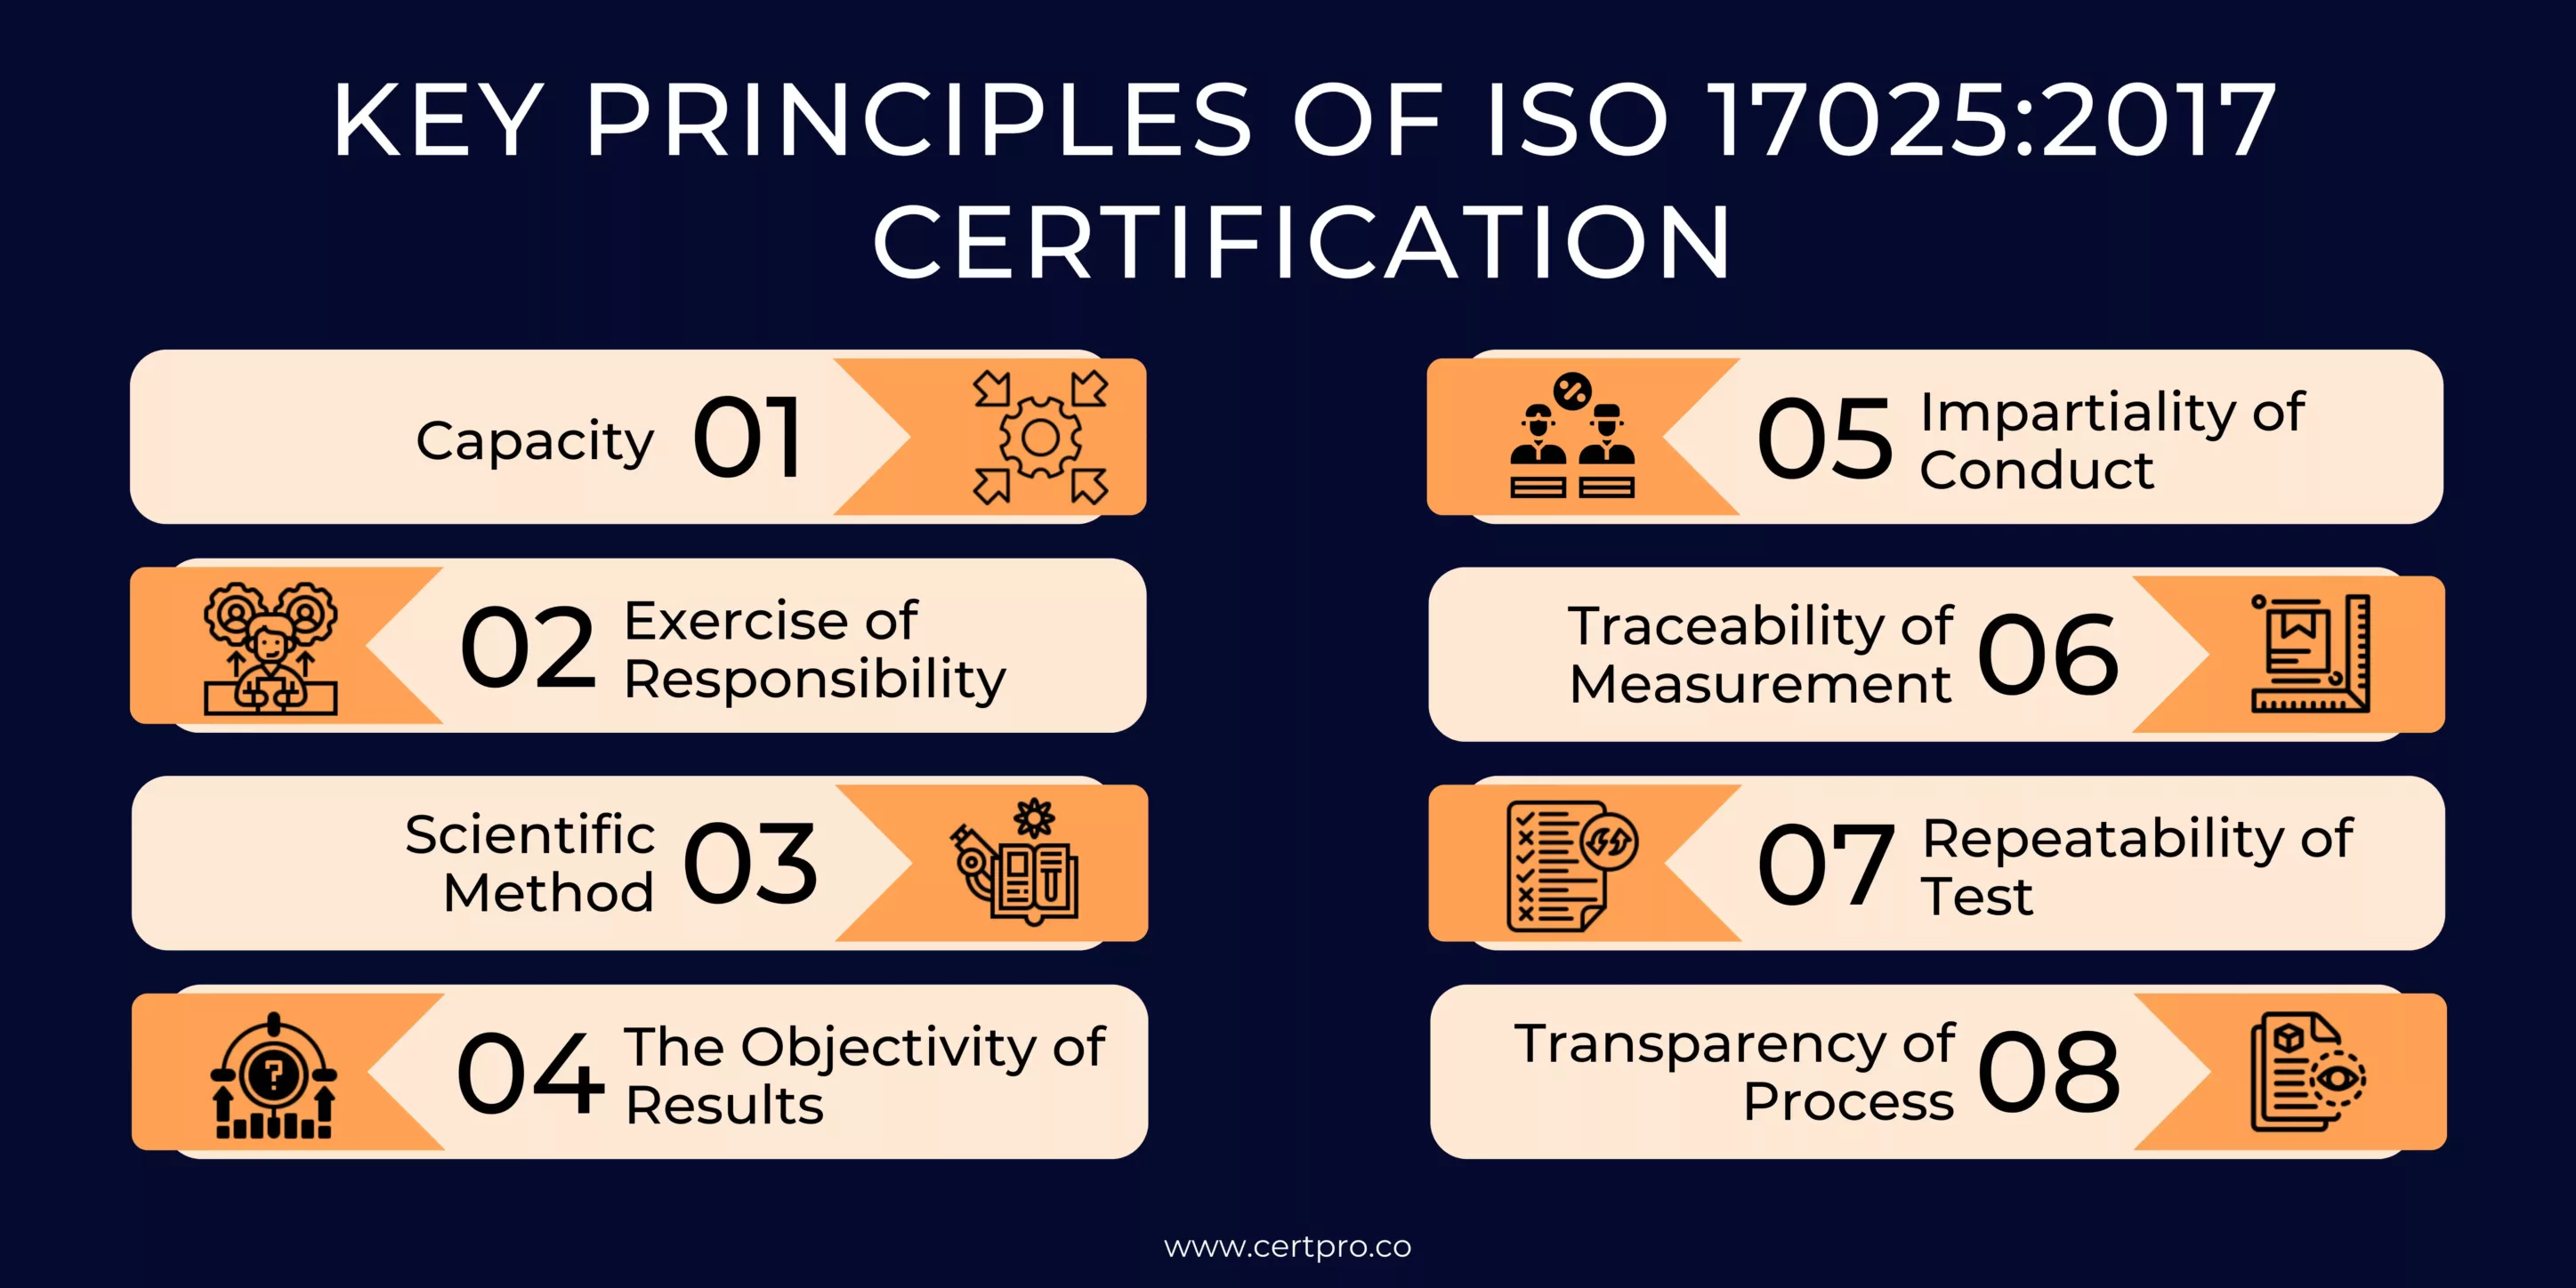 KEY PRINCIPLES OF ISO 17025